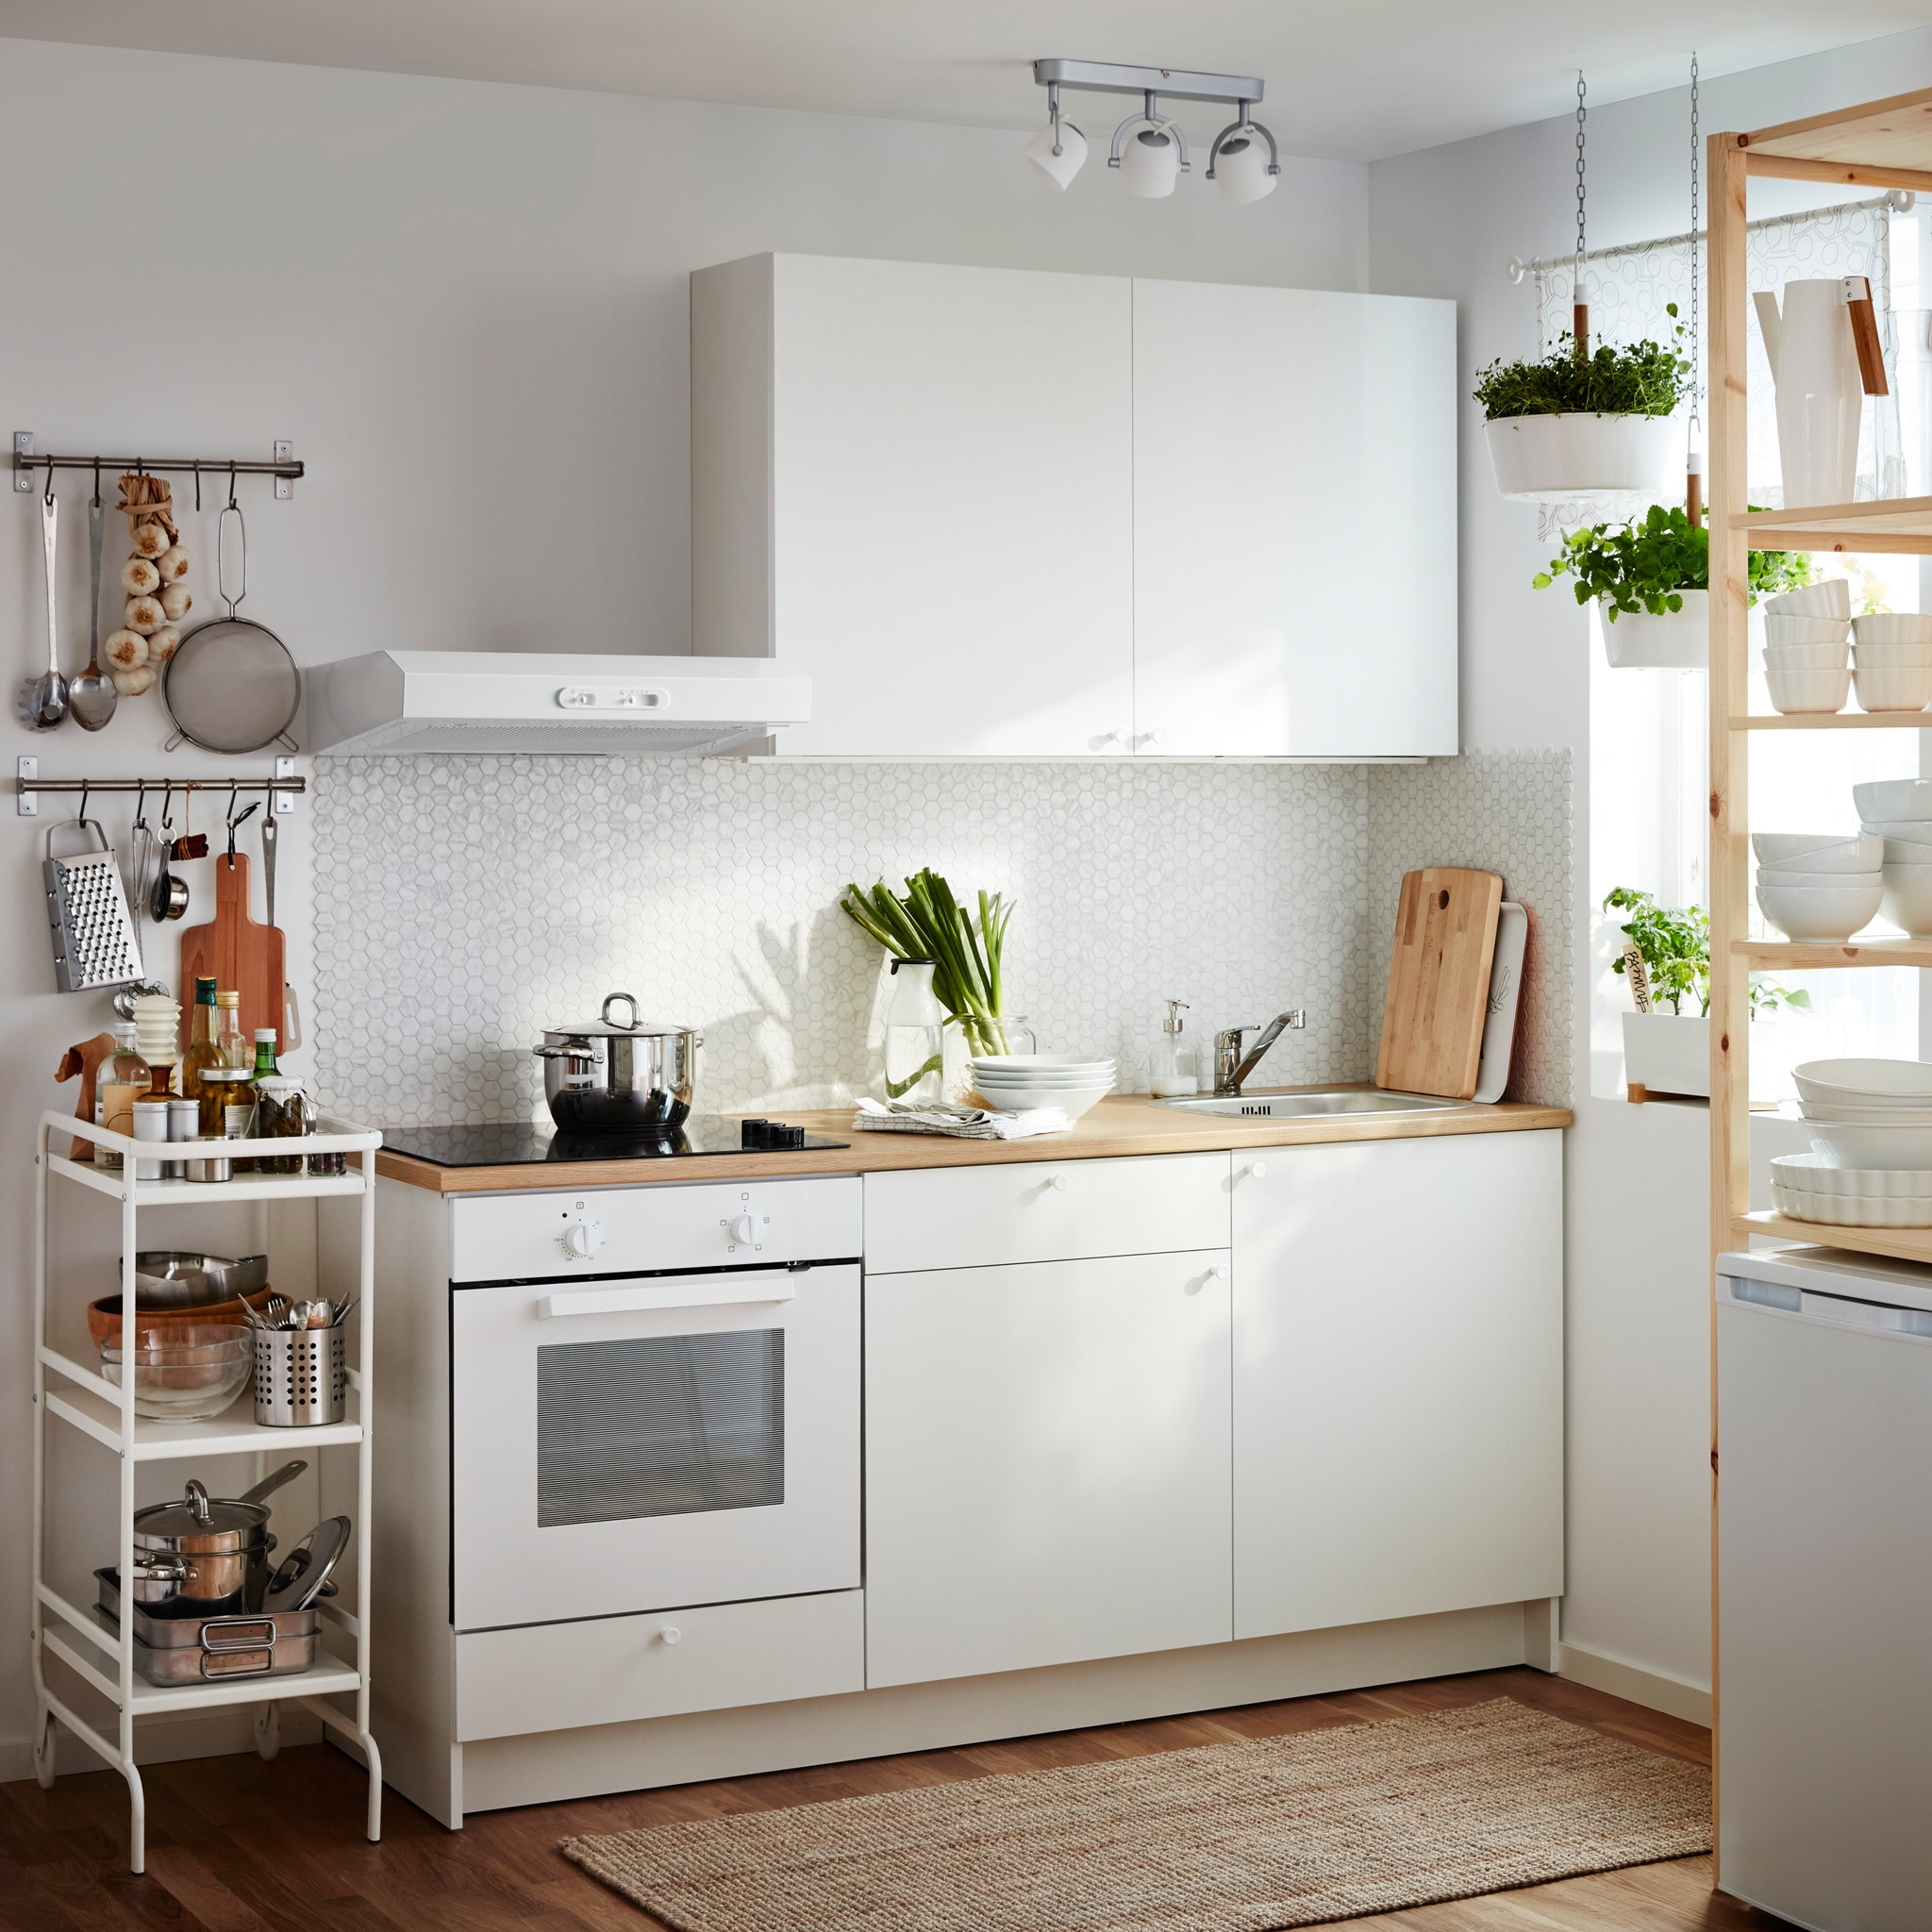 Best ideas about Ikea Kitchen Ideas
. Save or Pin Kitchens Kitchen Ideas & Inspiration Now.